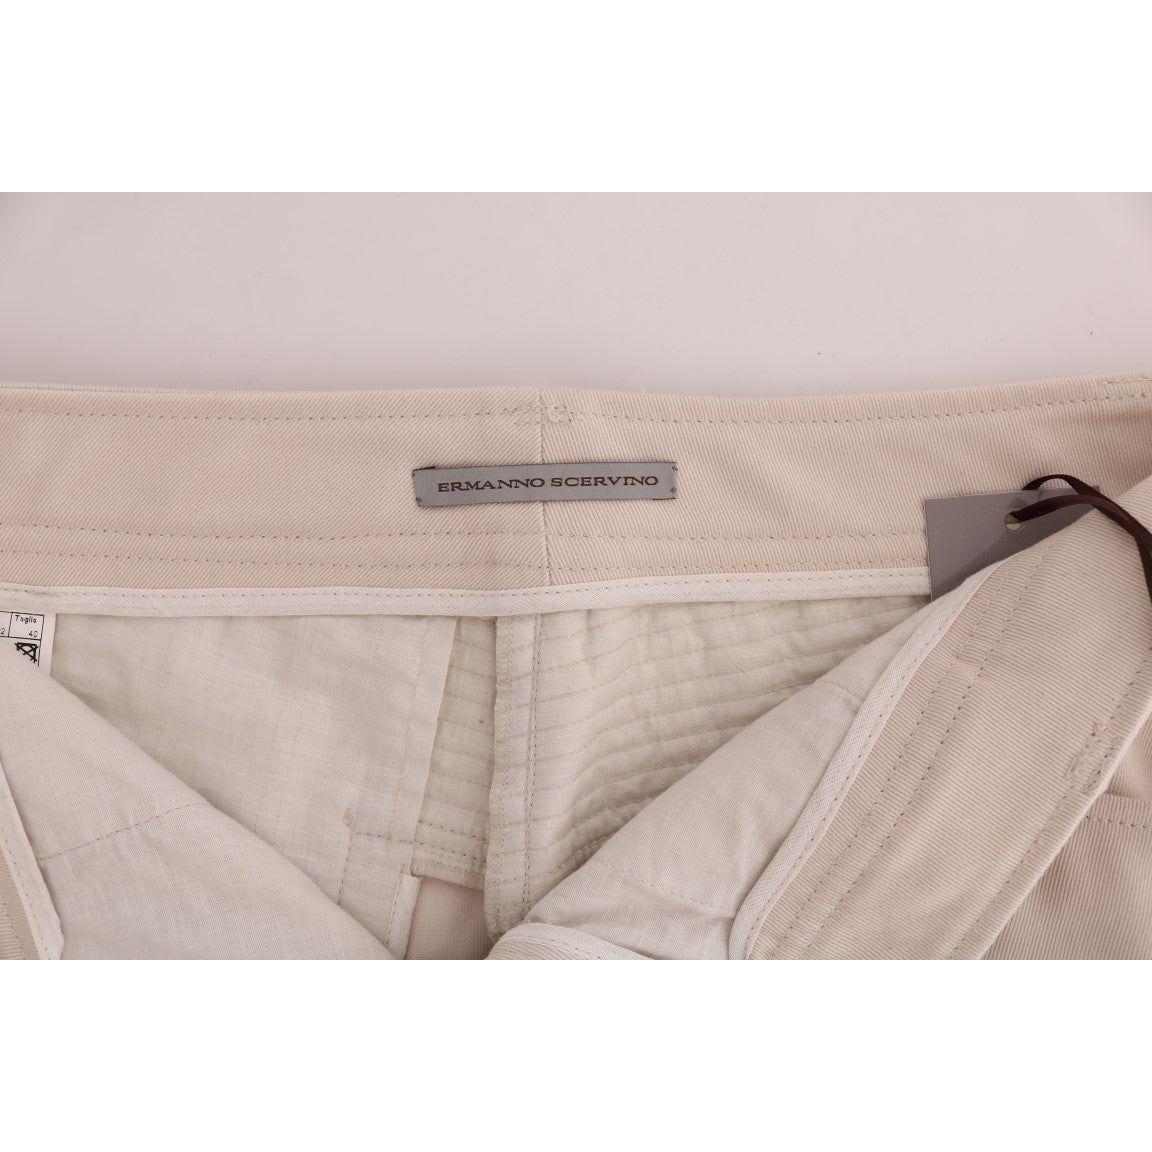 Ermanno Scervino Chic White Slim Fit Denim Treasure white-slim-fit-casual-jeans 449131-white-slim-fit-casual-jeans-4.jpg